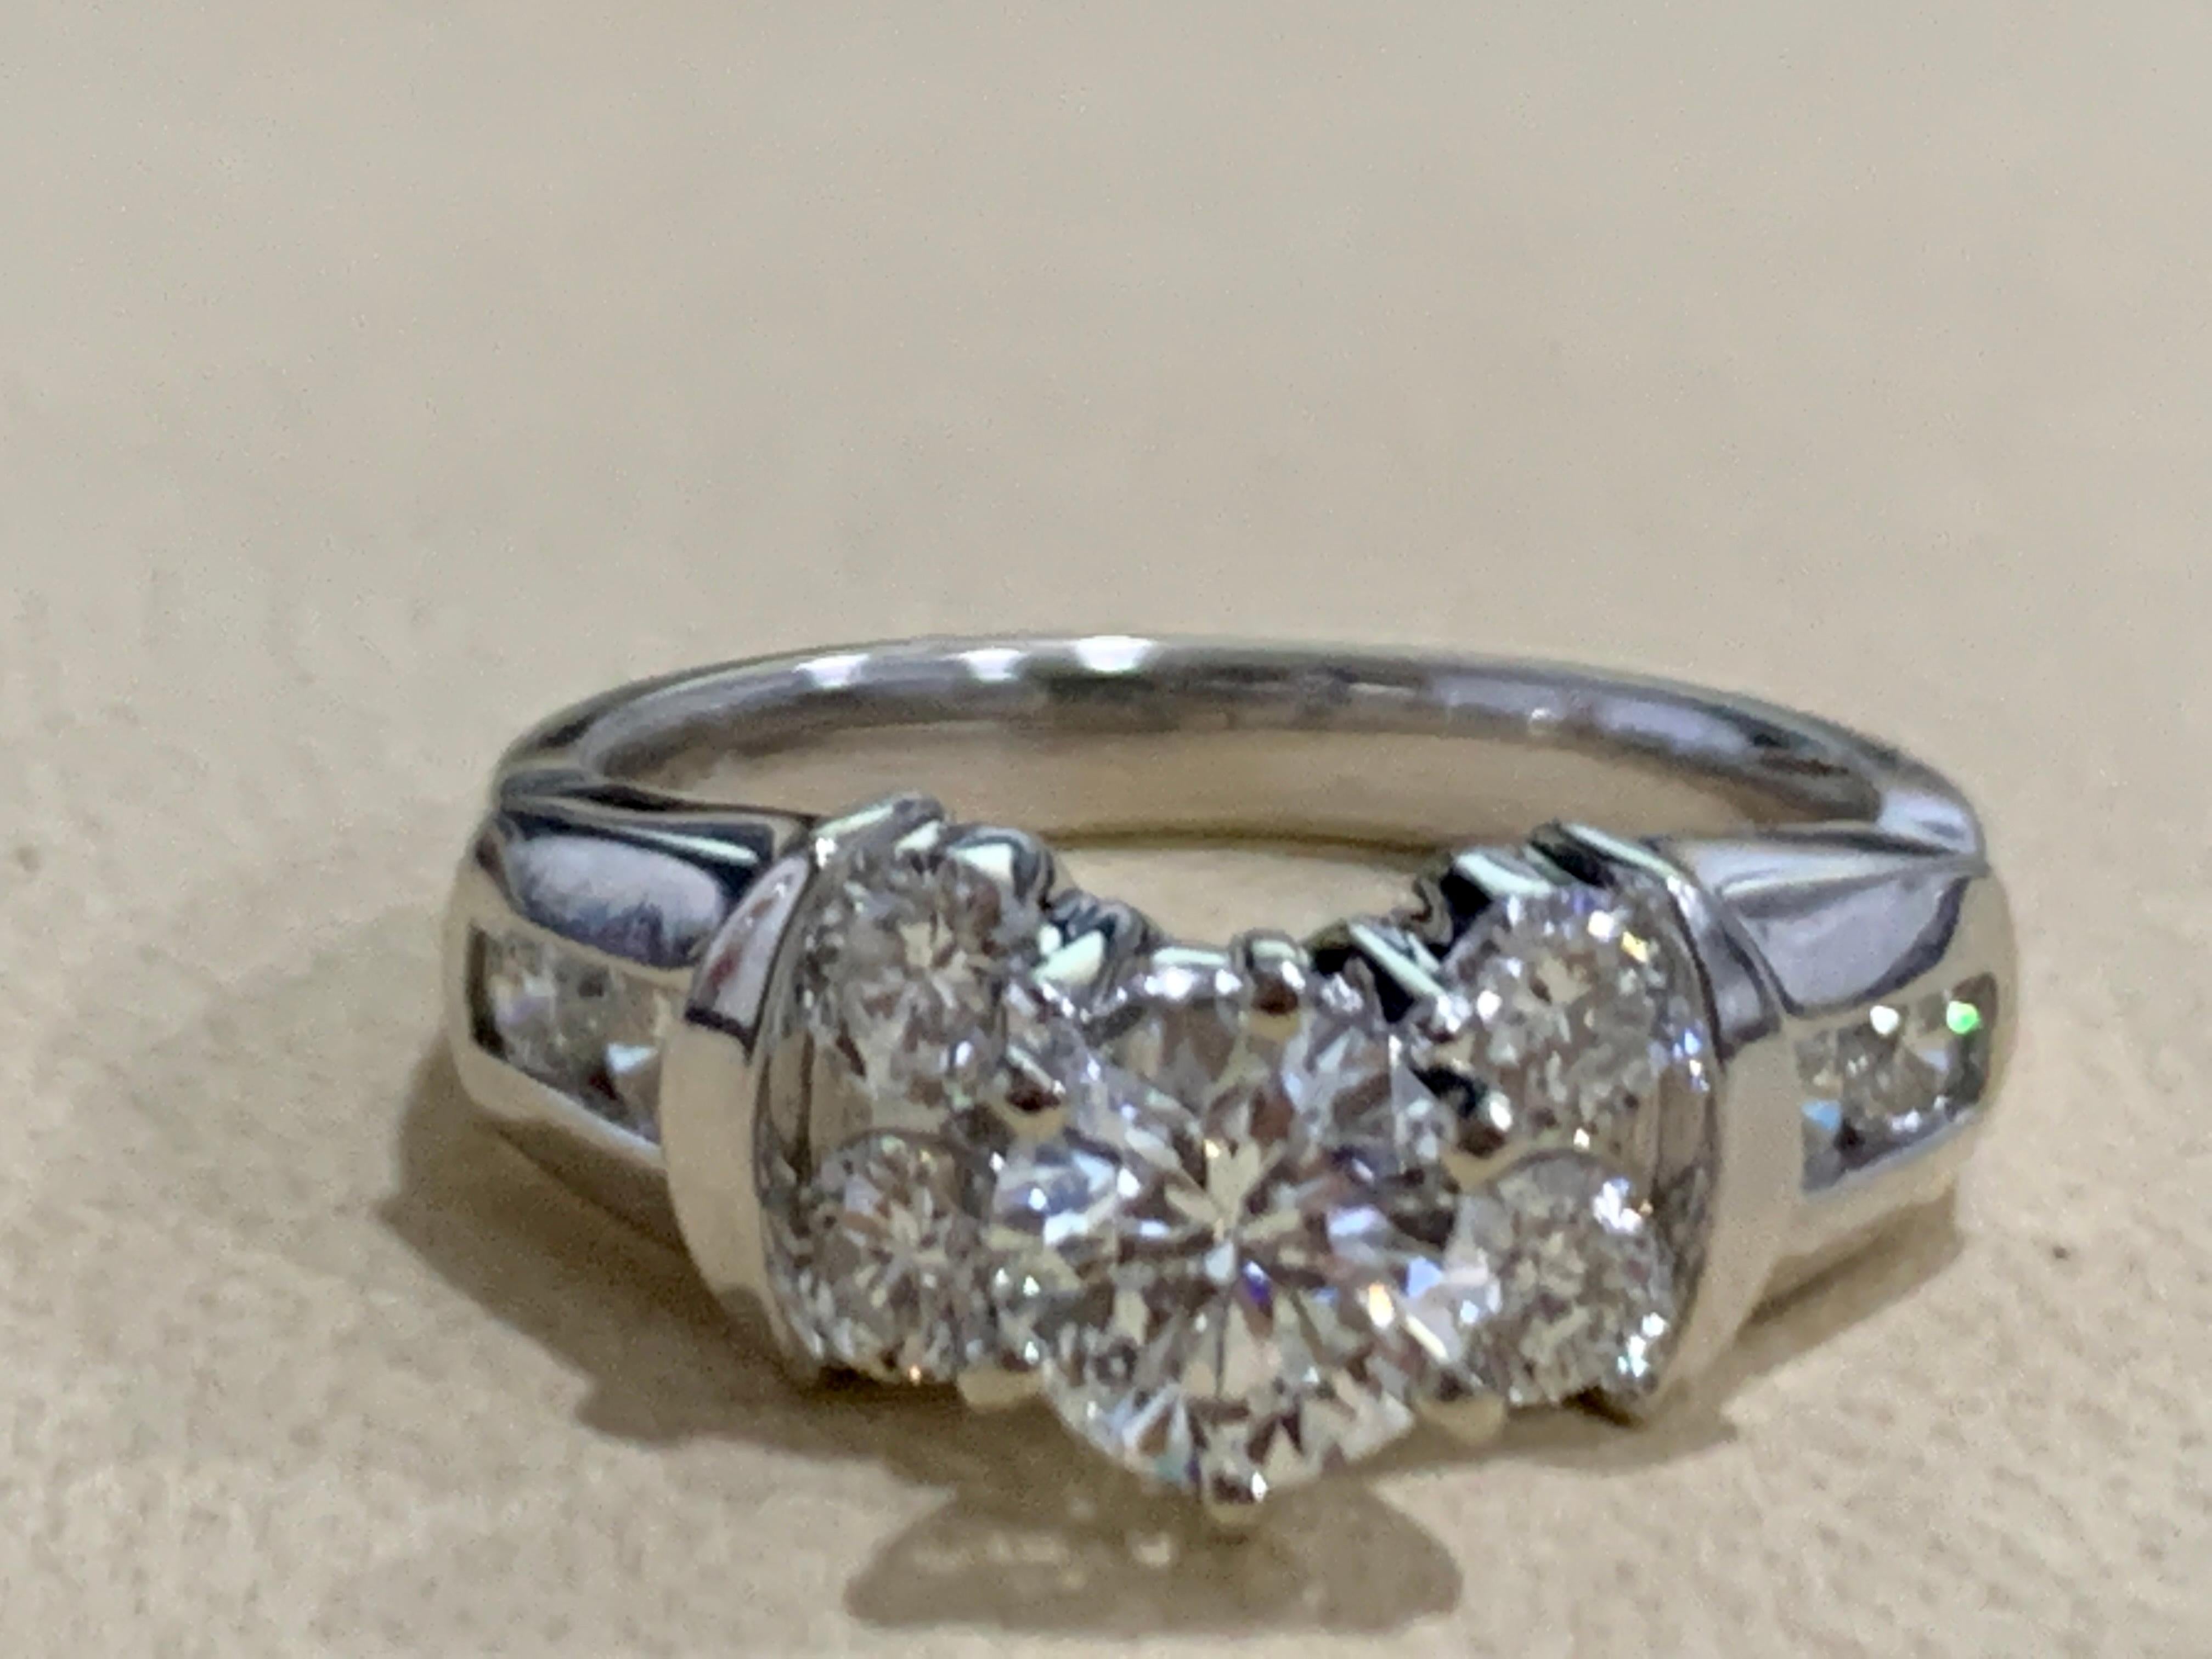 1.1 carat diamond ring